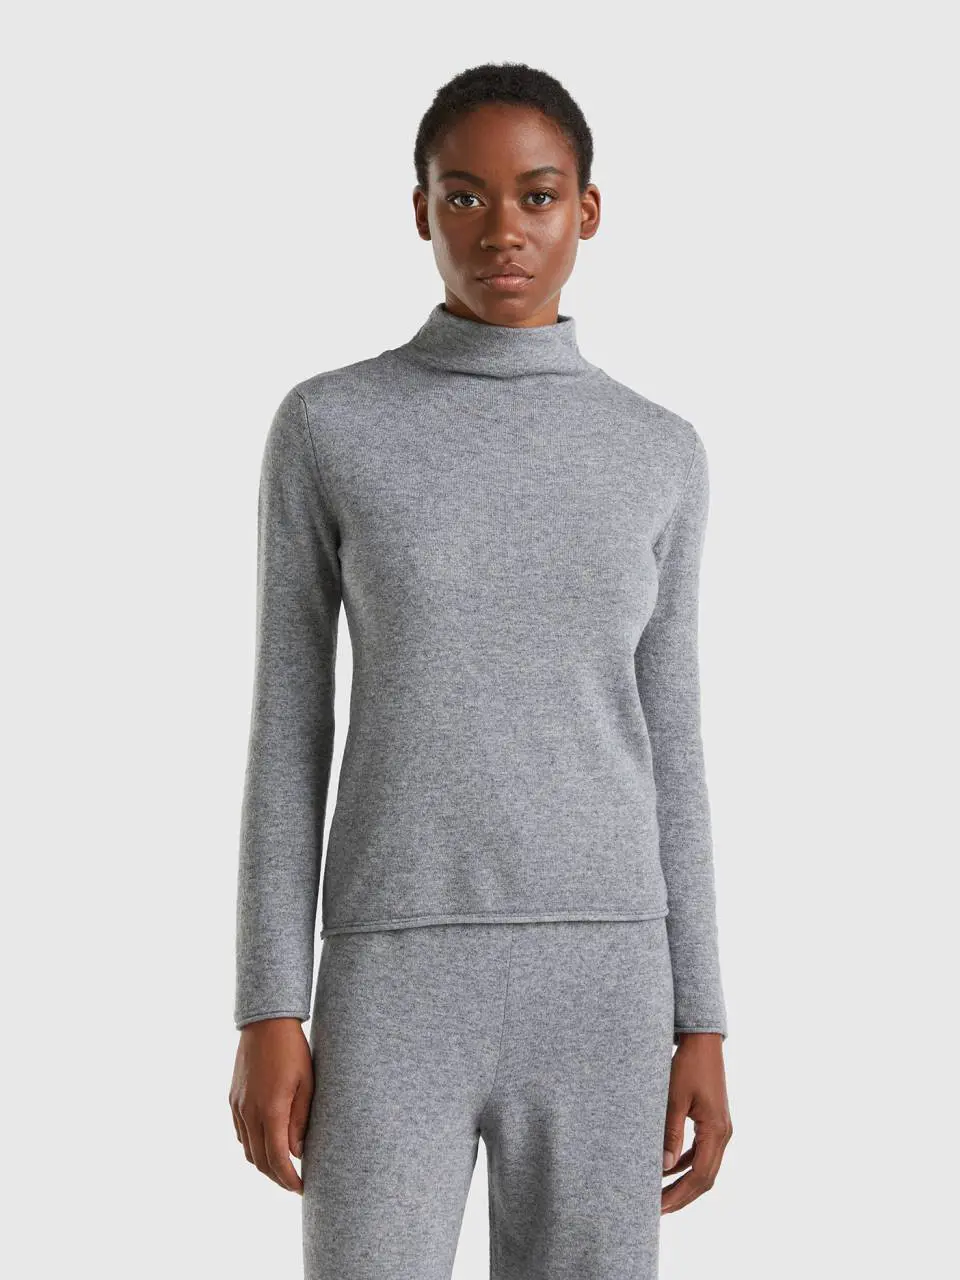 Benetton cashmere blend sweater. 1